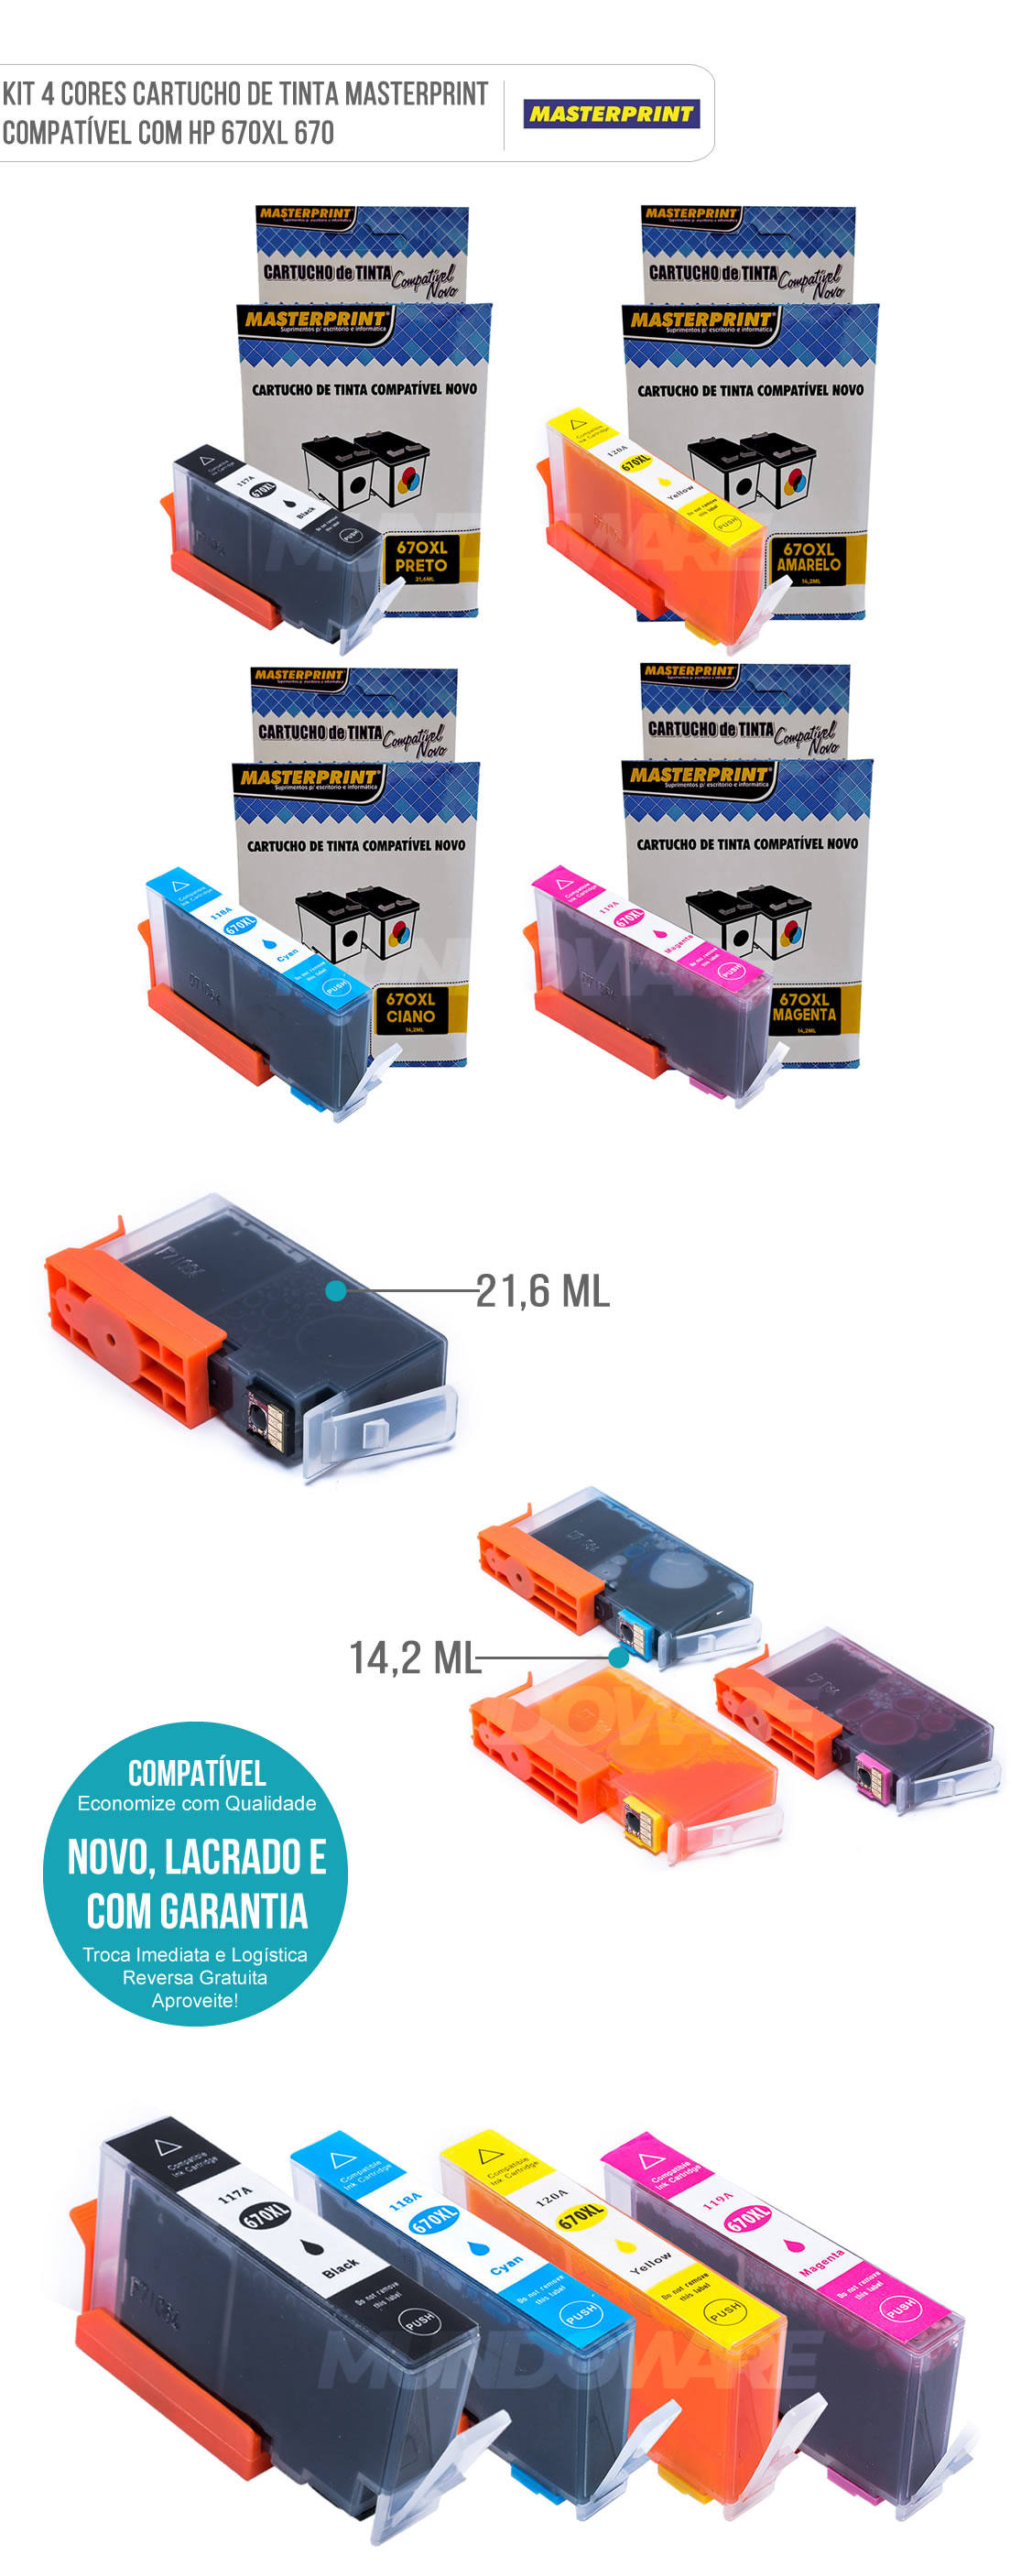 Kit 4 Cores Cartucho de Tinta Masterprint Compatível com 670xl 670 para Impressora HP 3525 4615 4625 5525 6520 6525